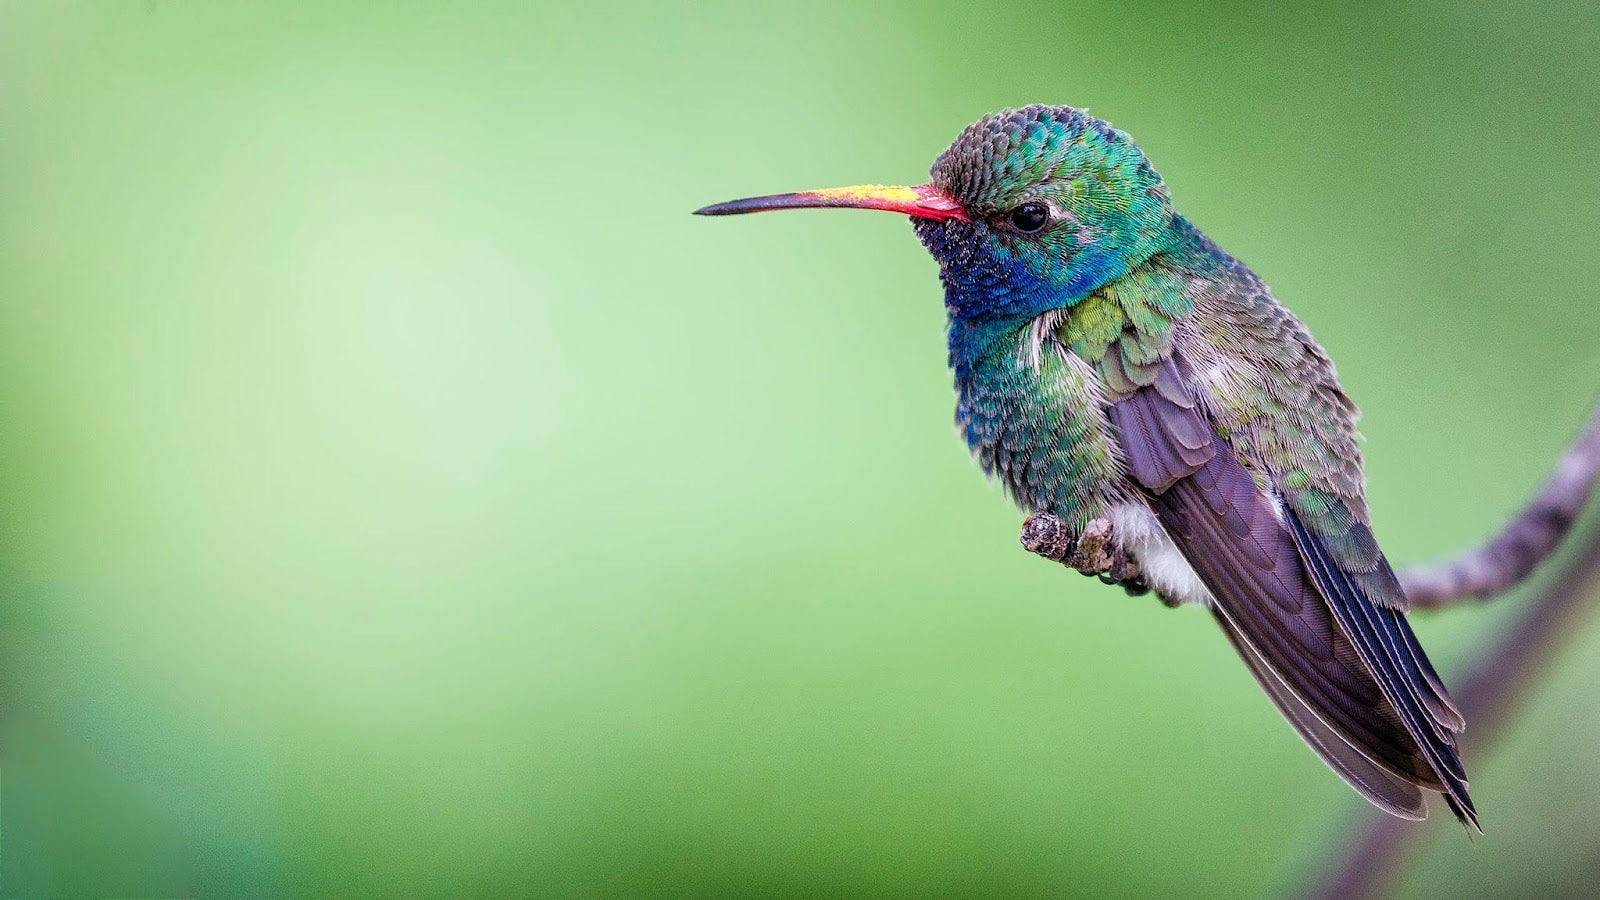 Hummingbird Photography Tips